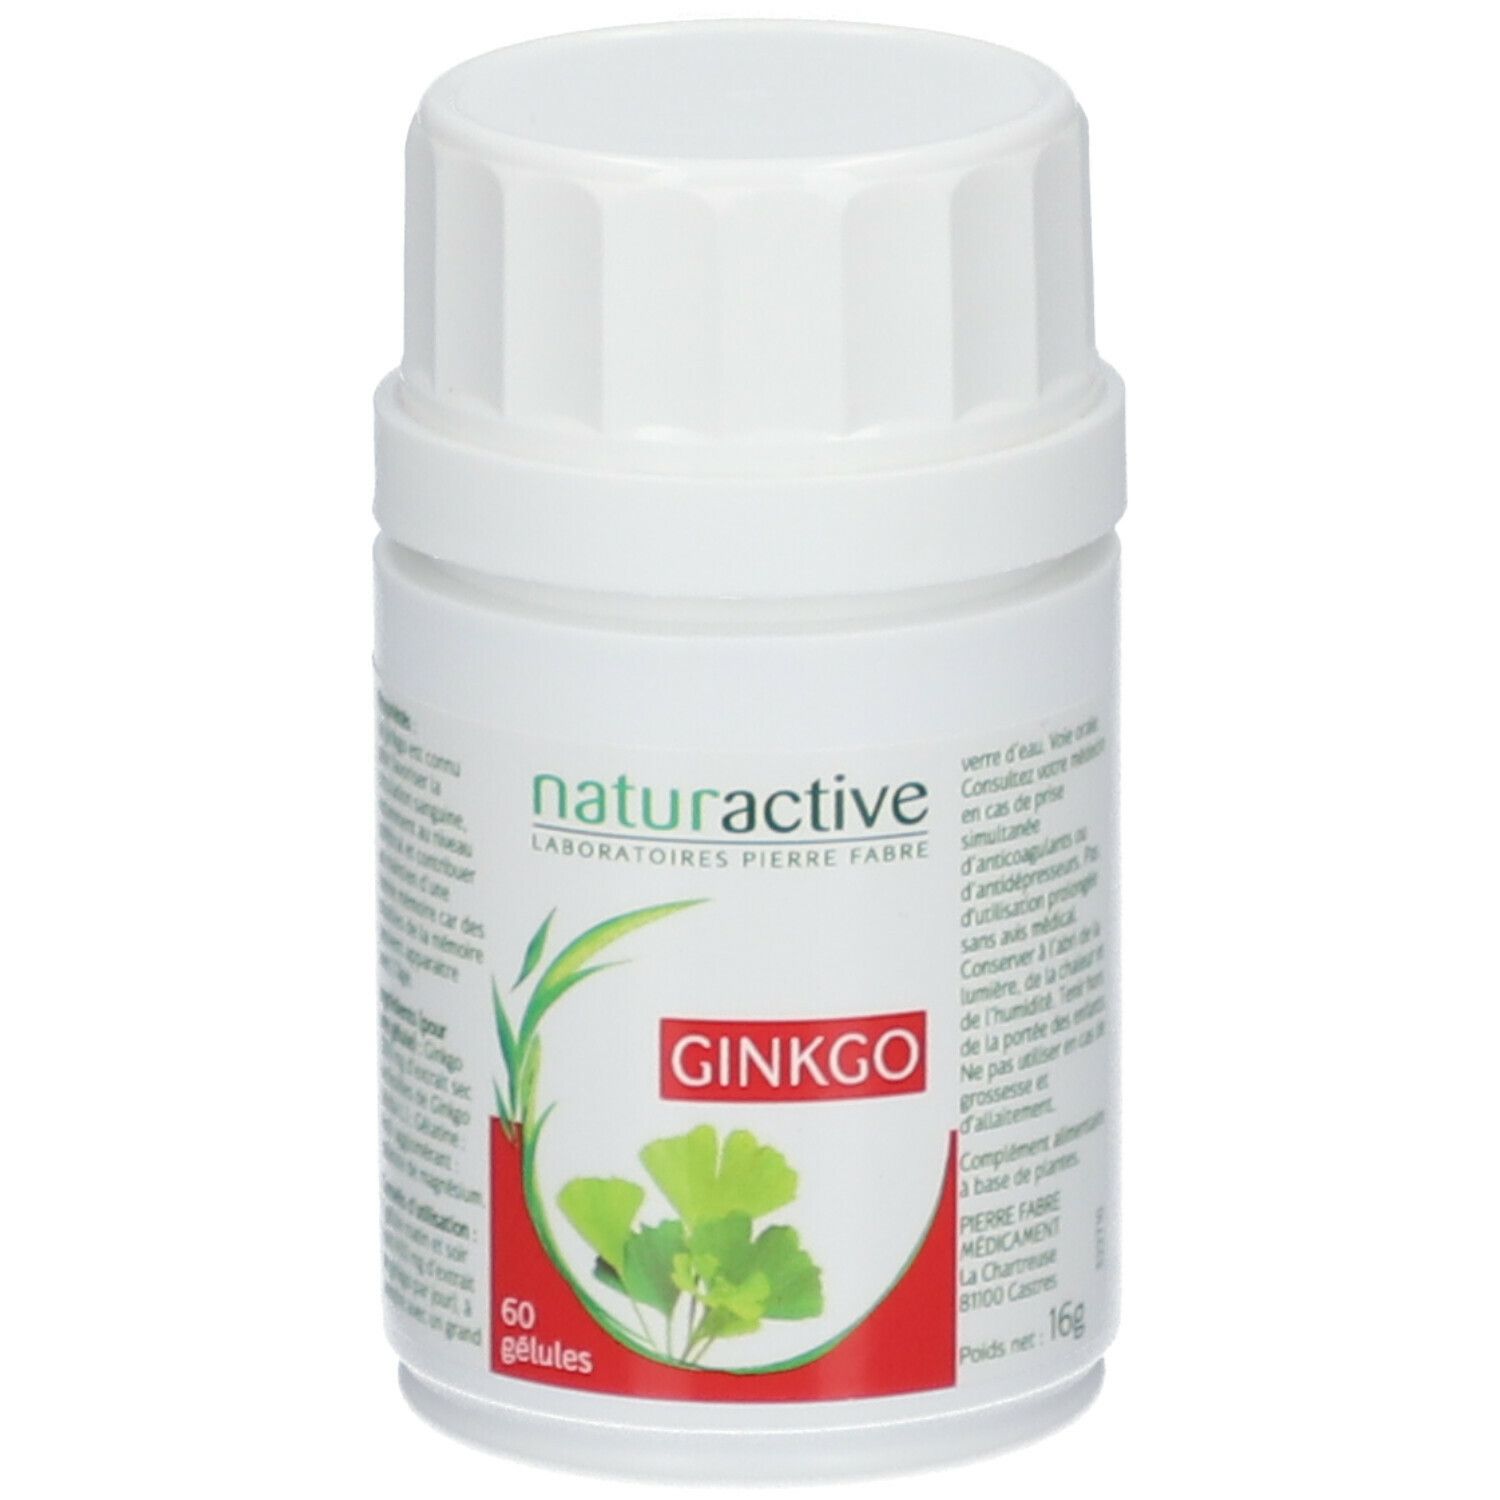 Naturactive Ginkgo